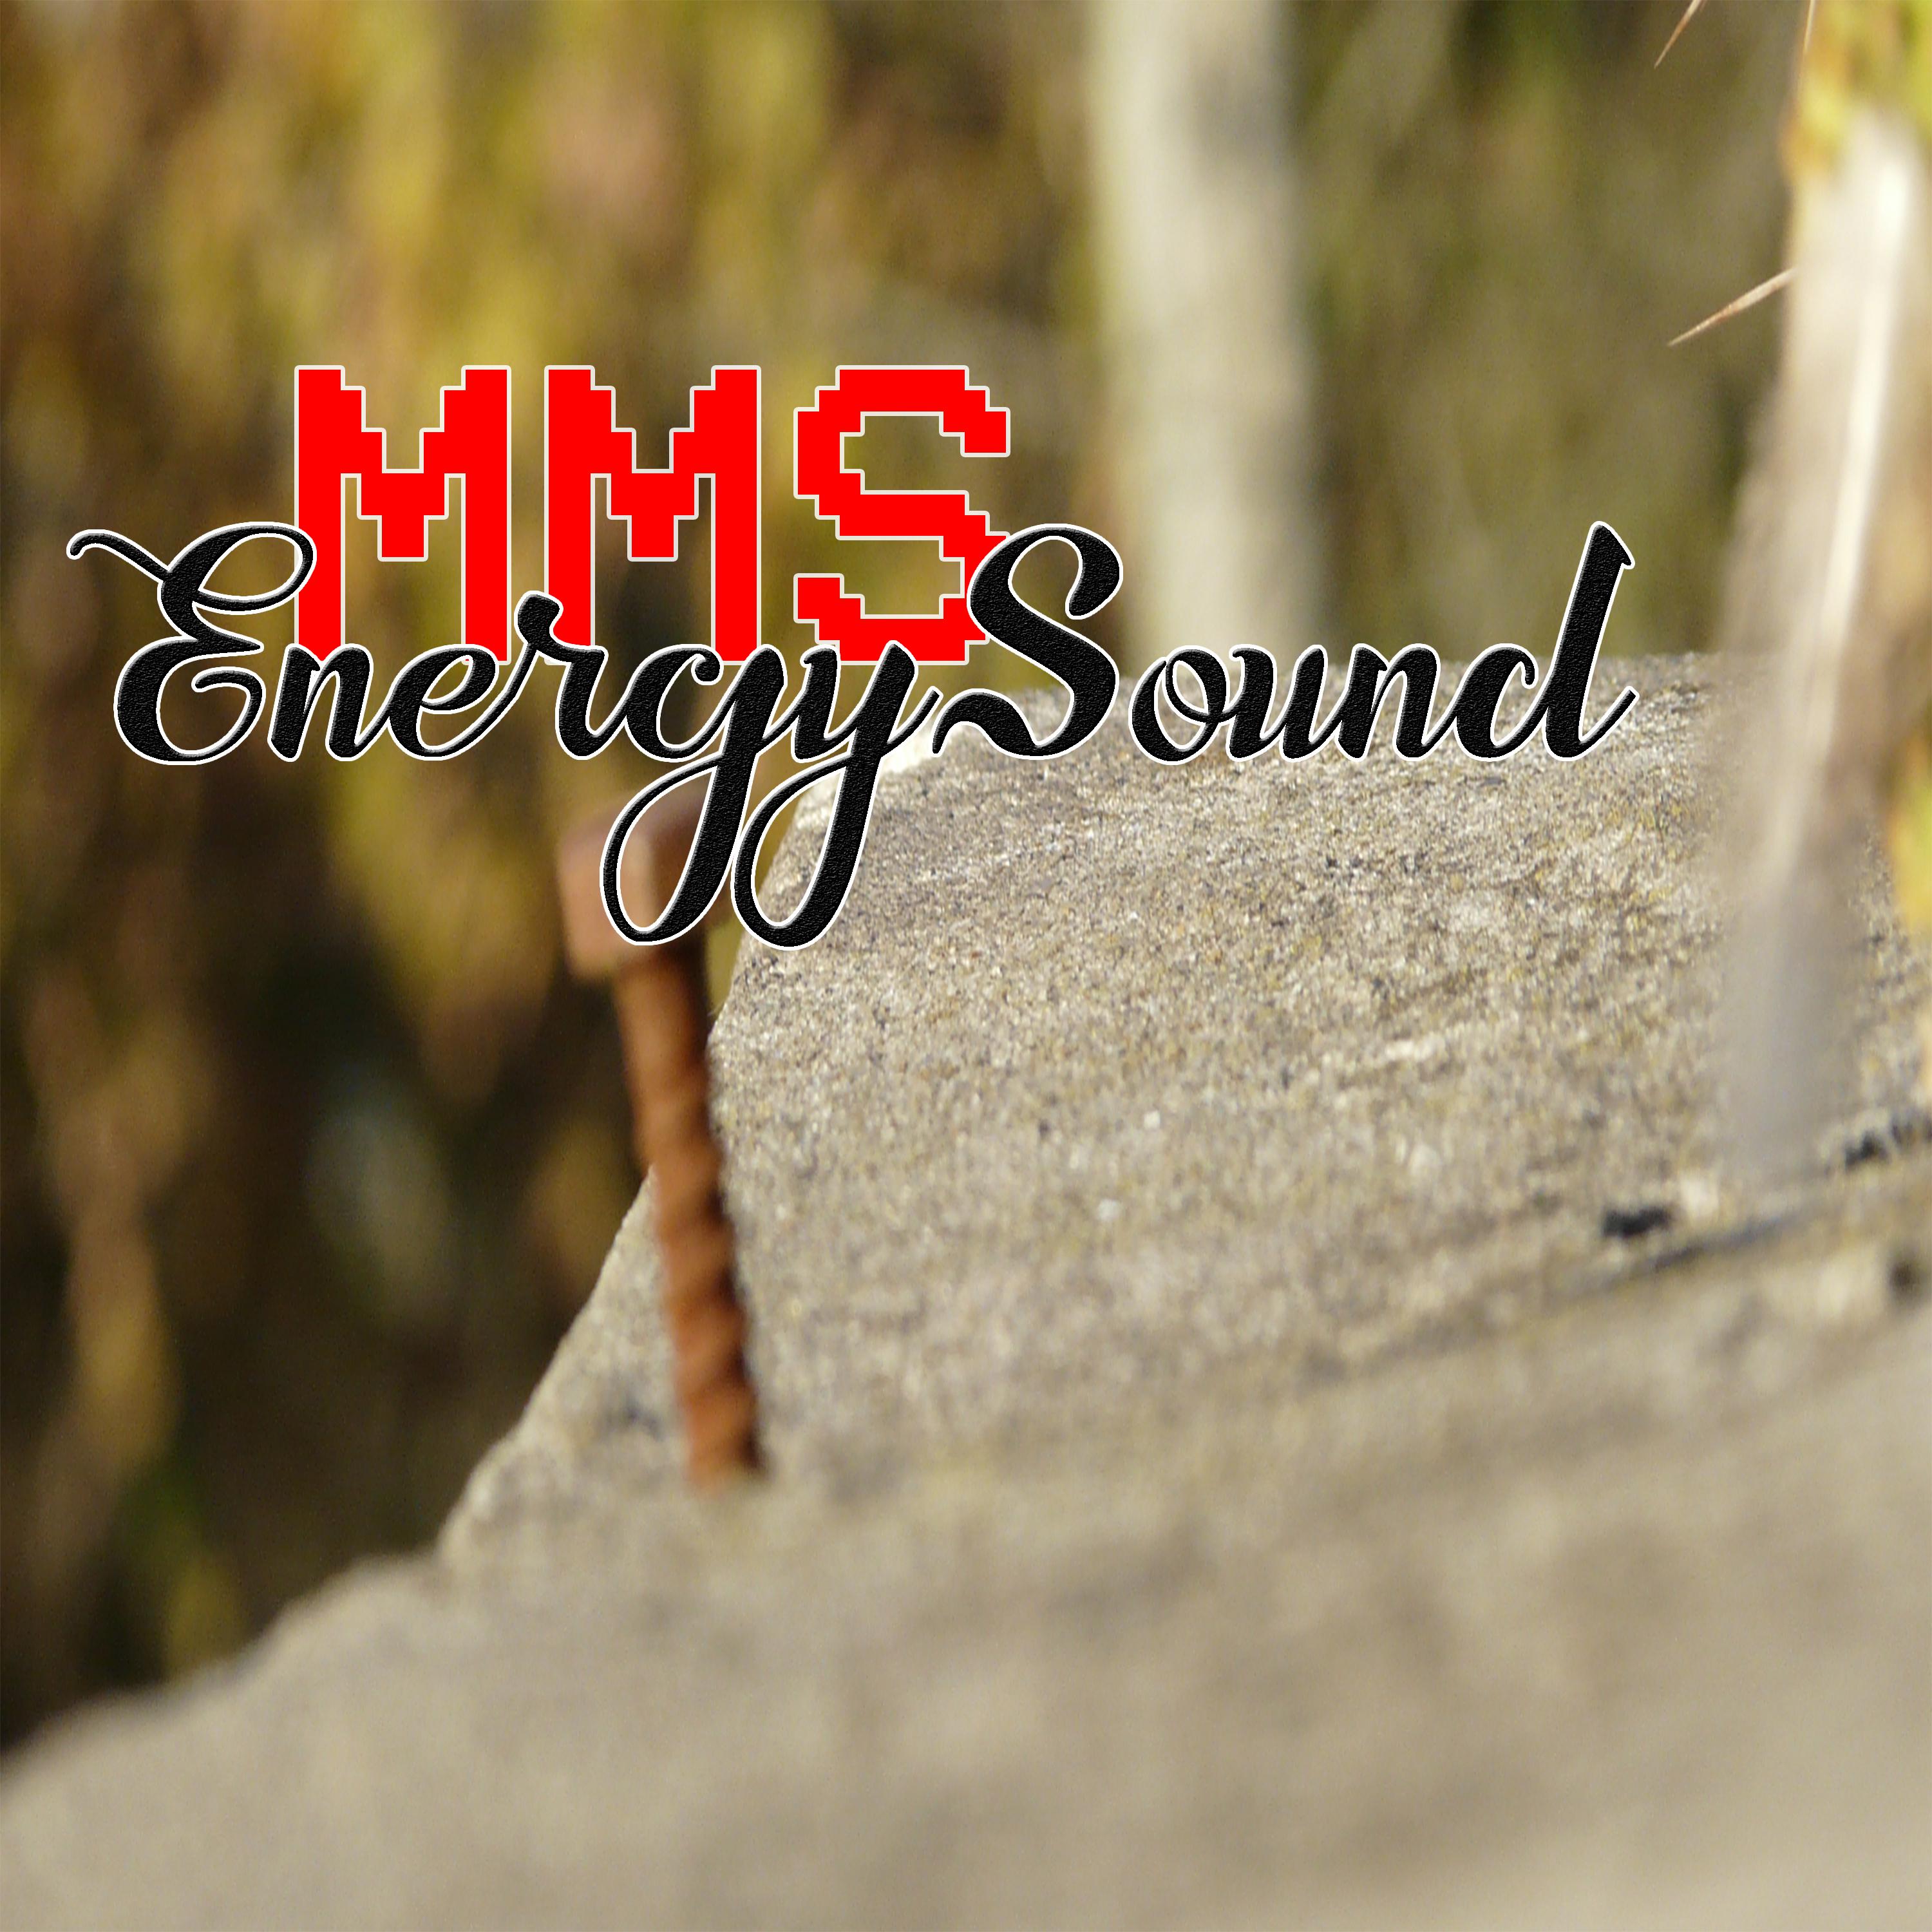 MMS - Energysound